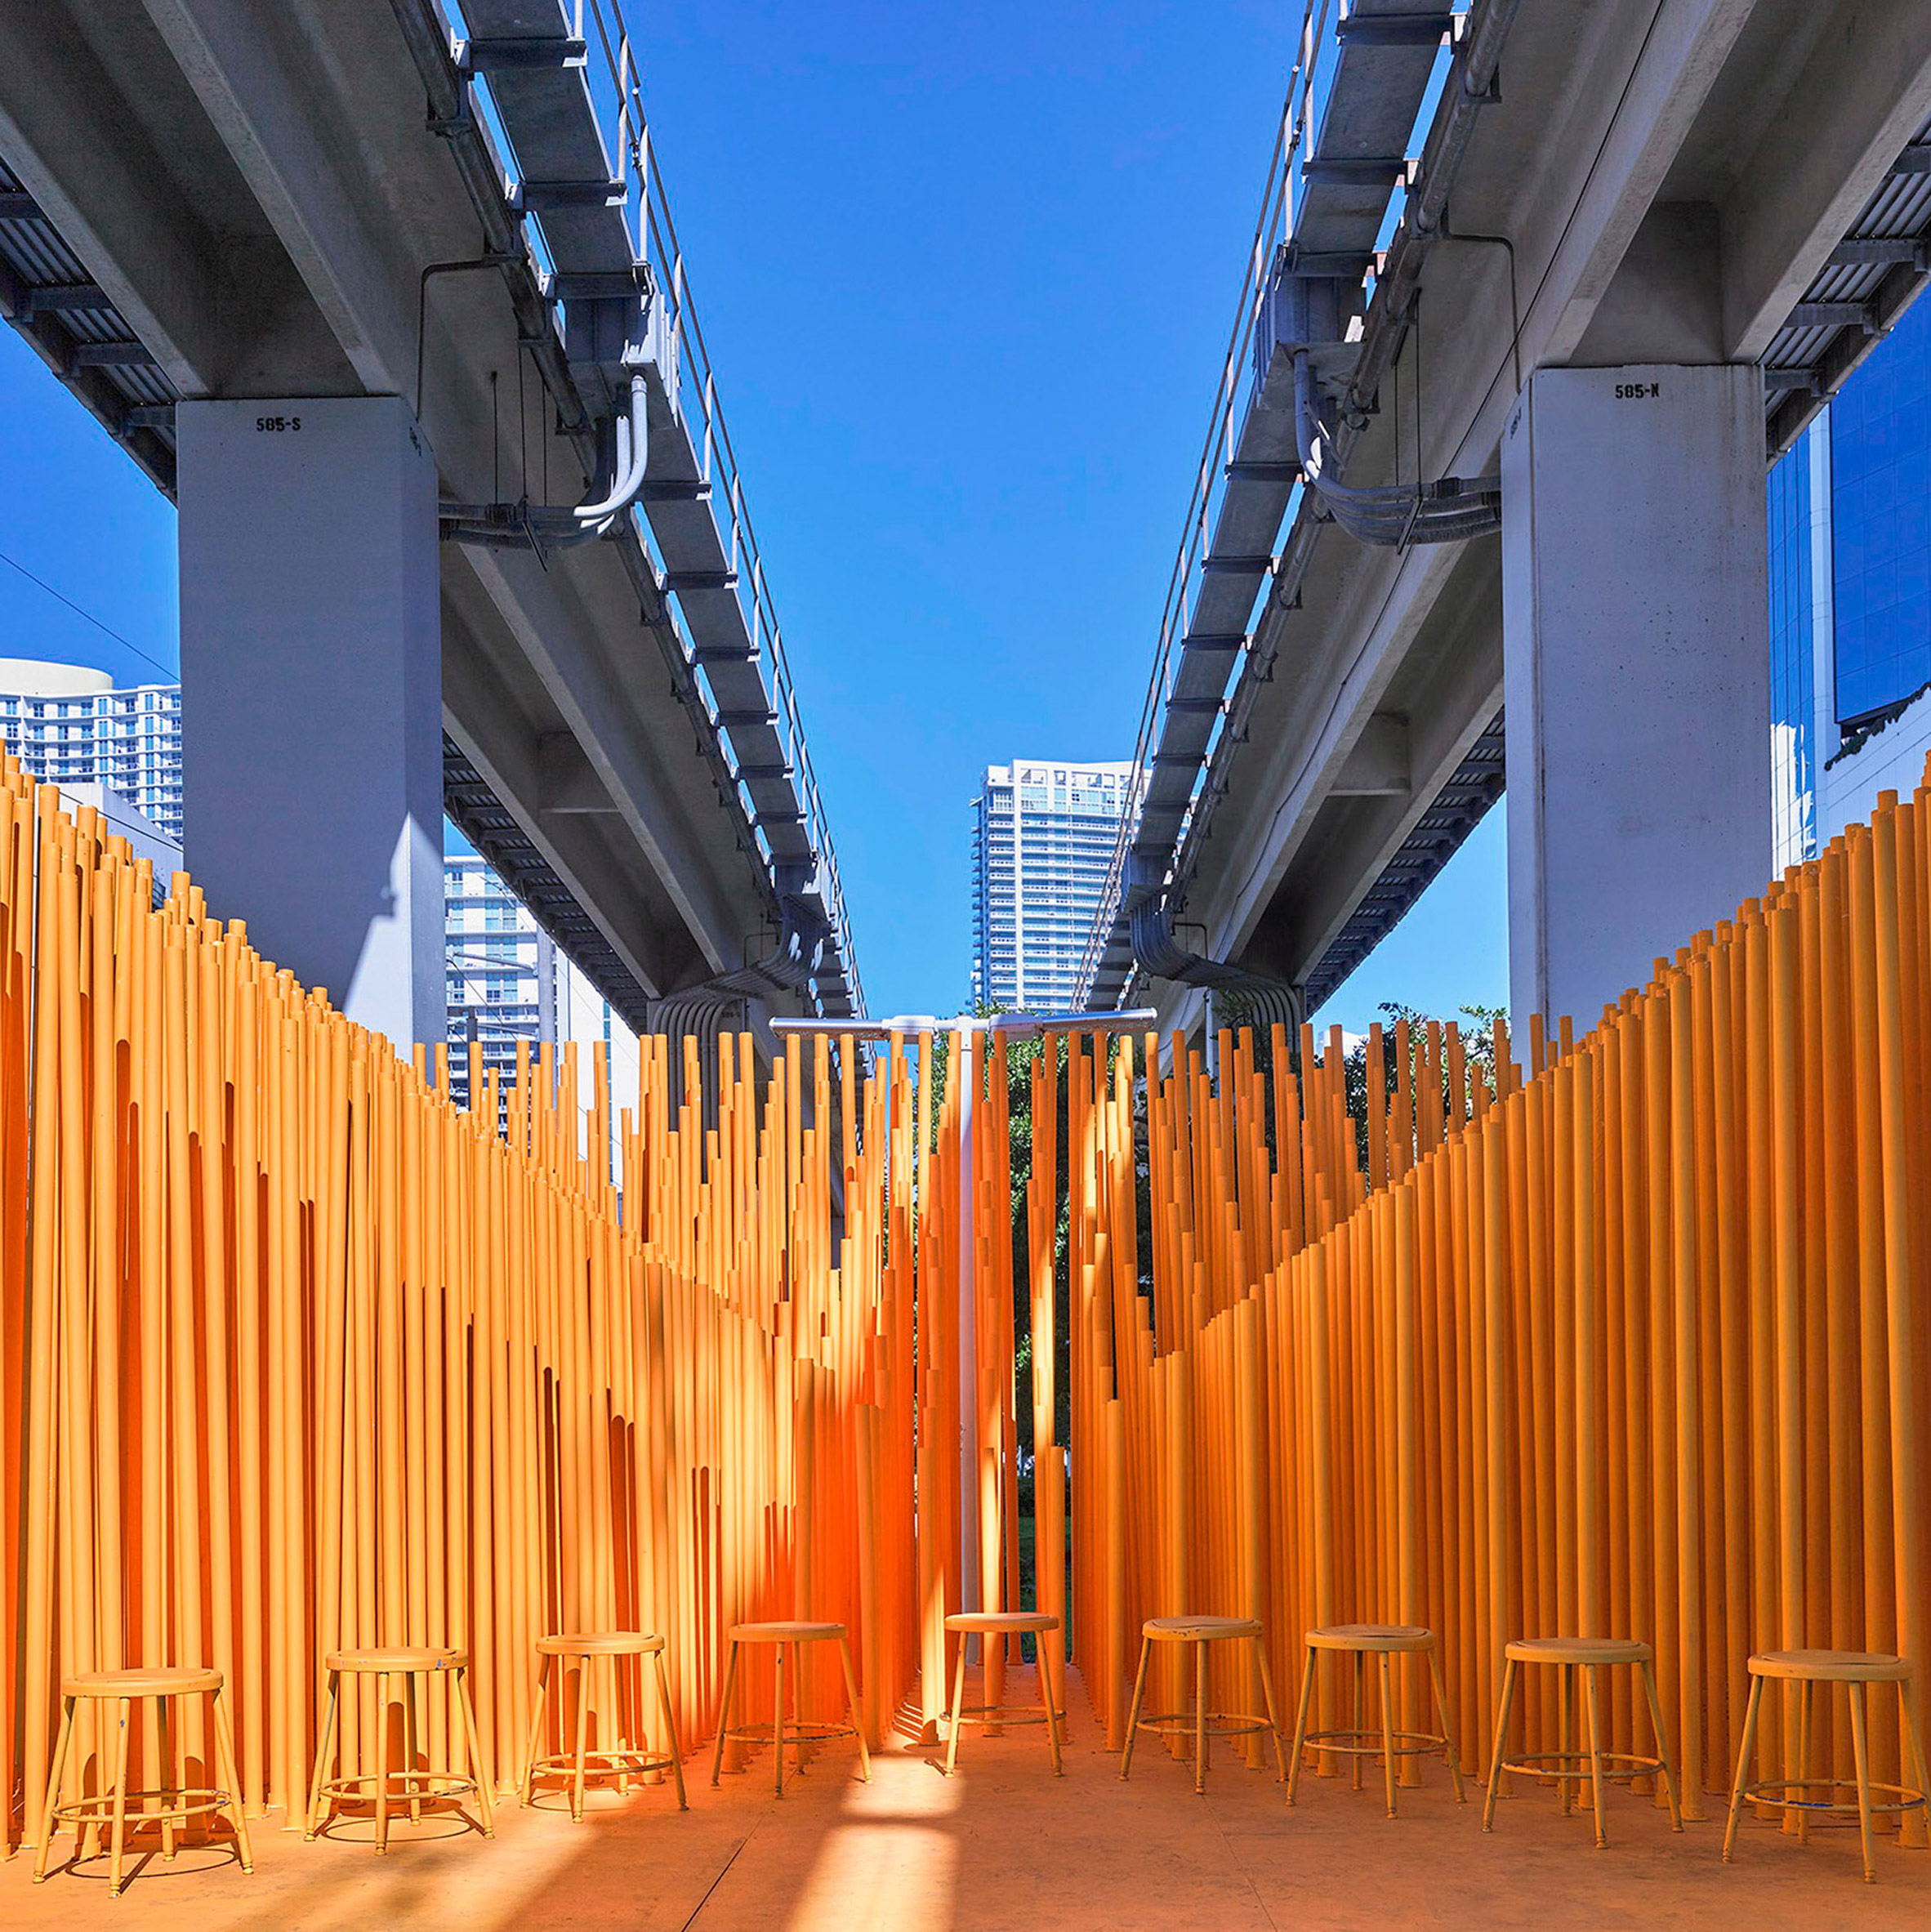 Architecture students install bright orange stage below Miami transit station-0